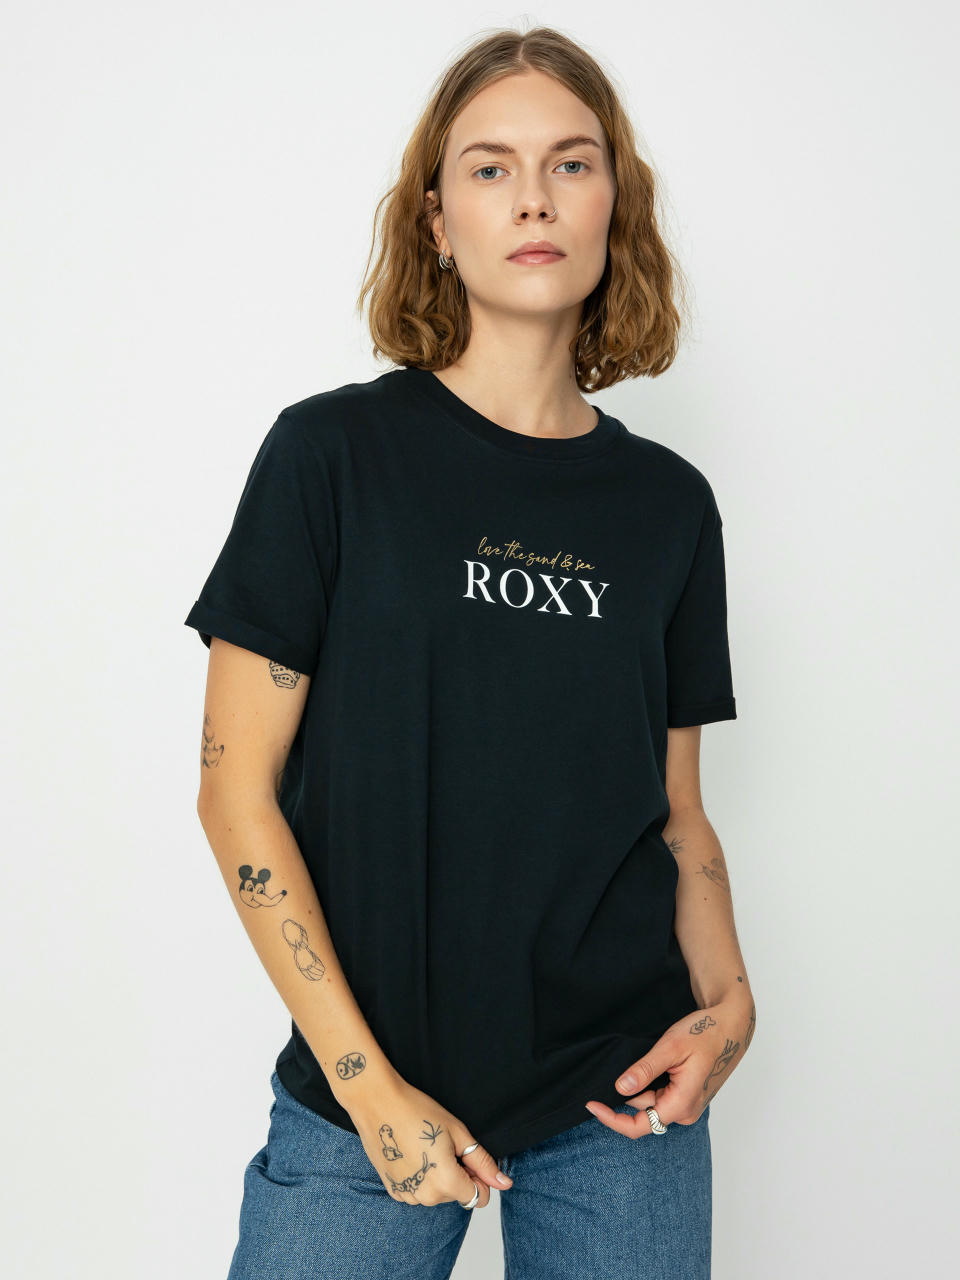 Urban Roxy - Sale | SUPER-SHOP